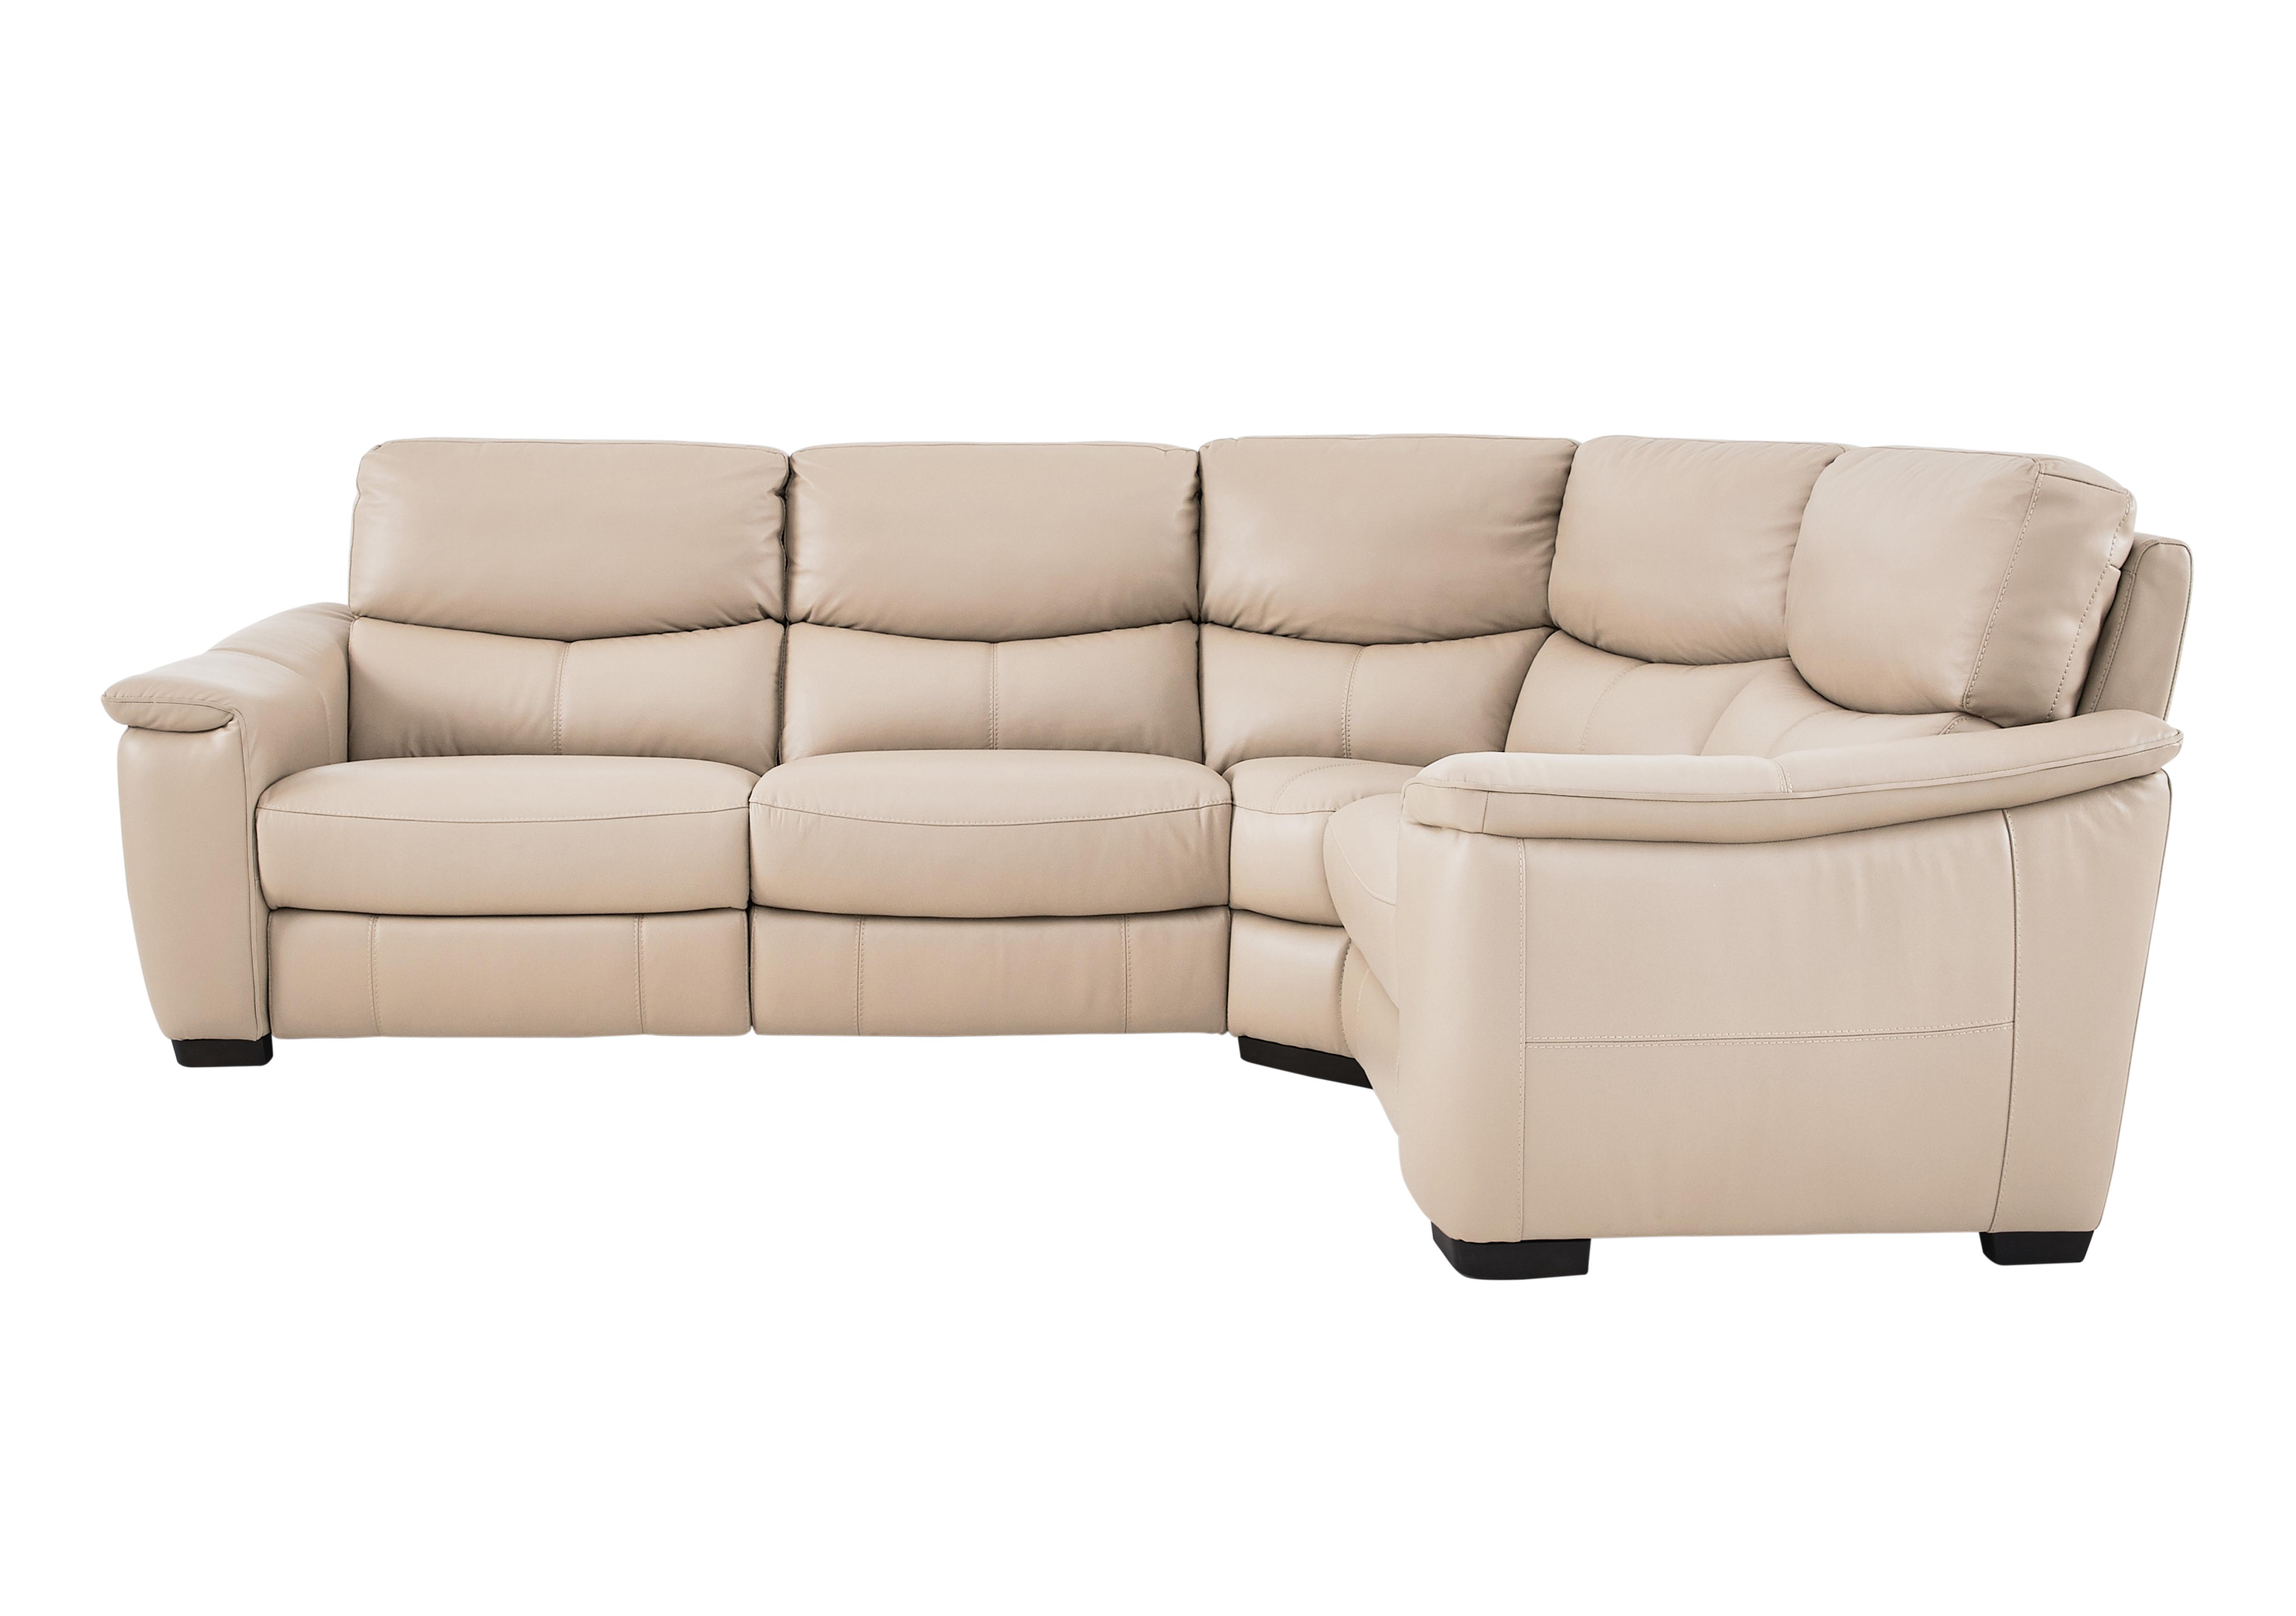 flex leather sofa recliner